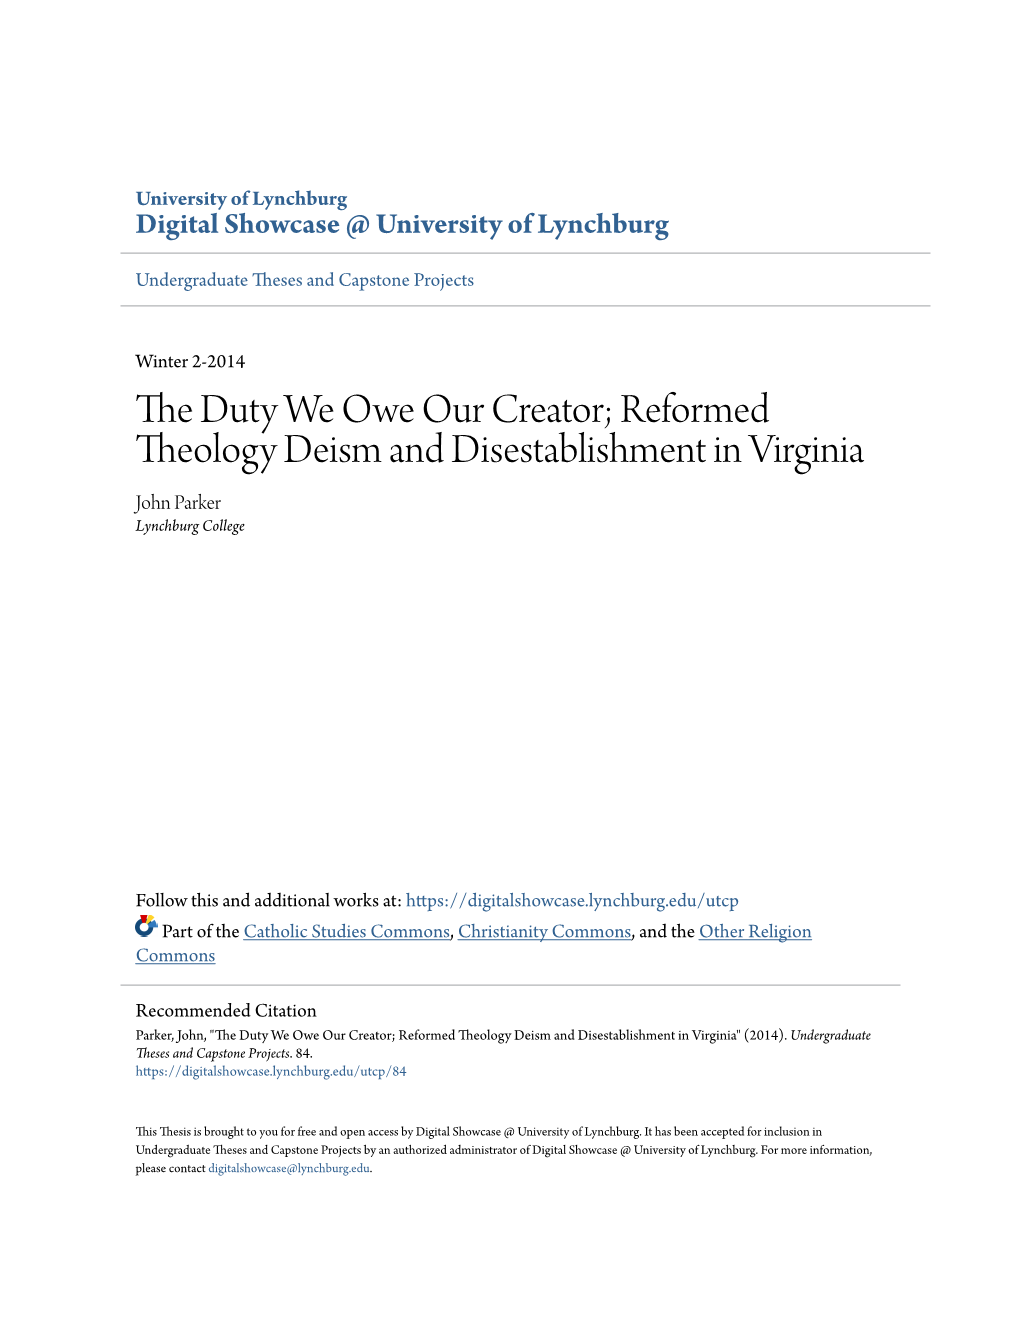 Reformed Theology Deism and Disestablishment in Virginia John Parker Lynchburg College